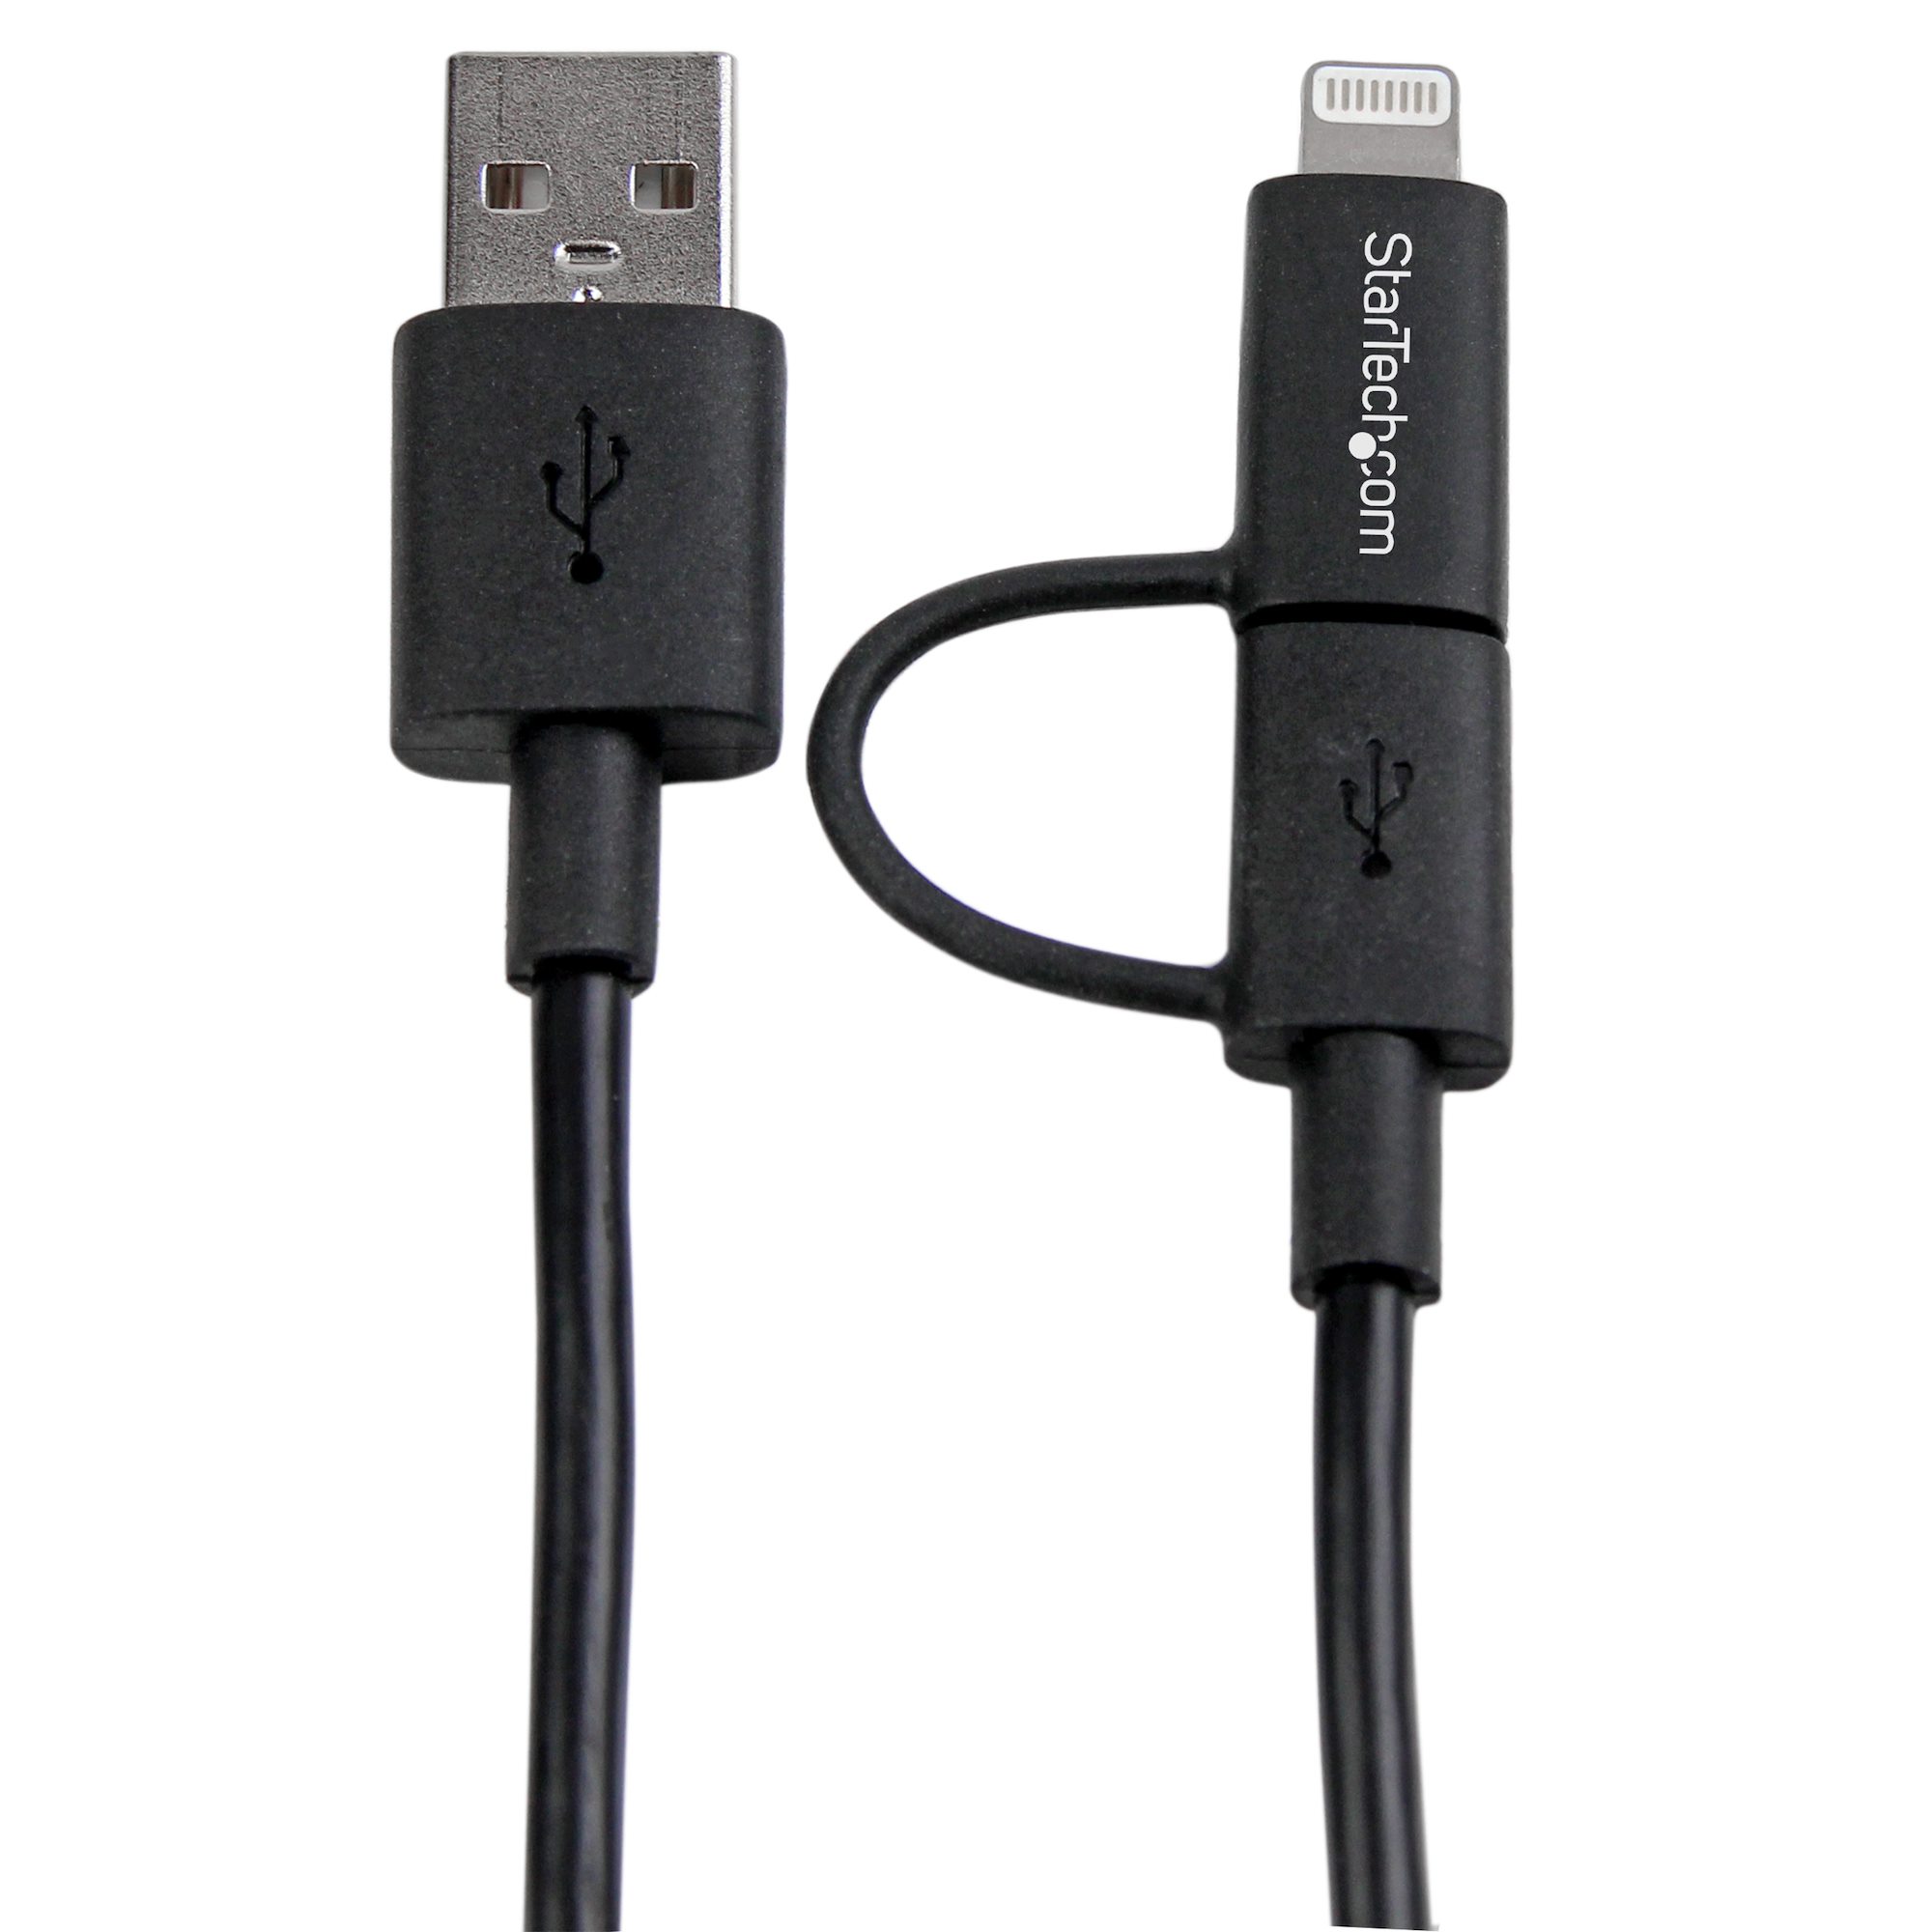 Cable 2 en 1 Lightning + Micro USB para iPhone iPad Android - Tecnopura